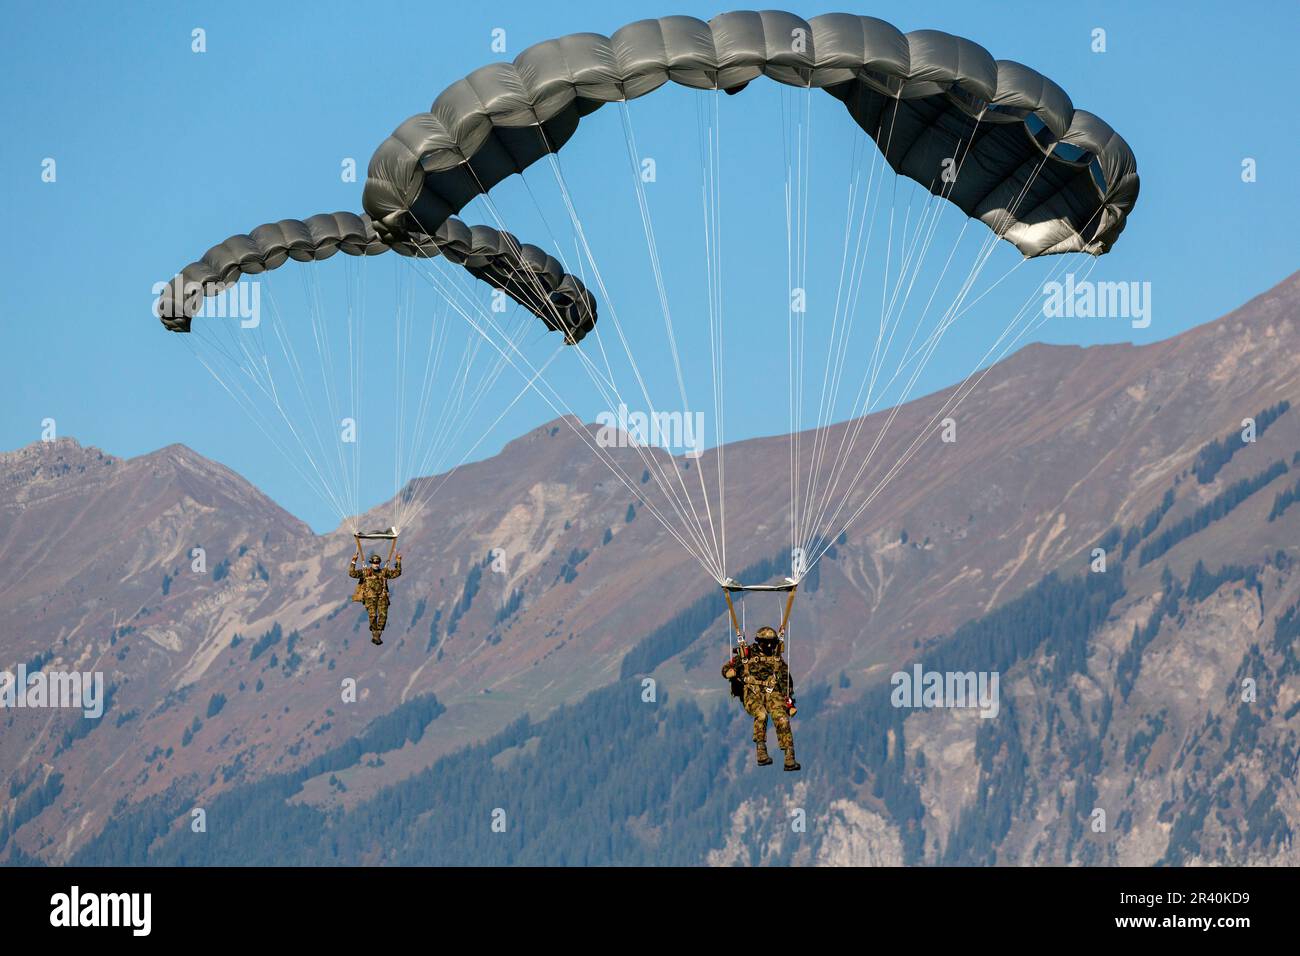 Swiss Army paratroopers descending through the sky, Meiringen, Switzerland. Stock Photo